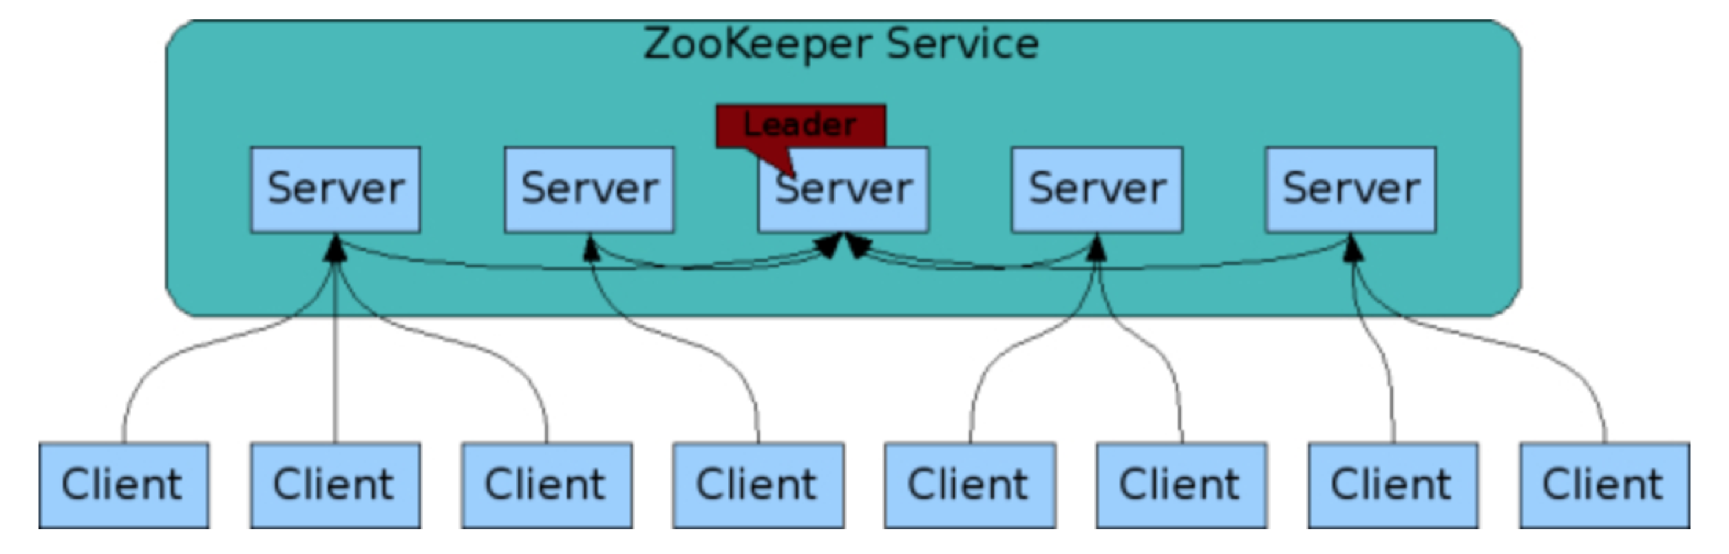 ZooKeeper 架构图